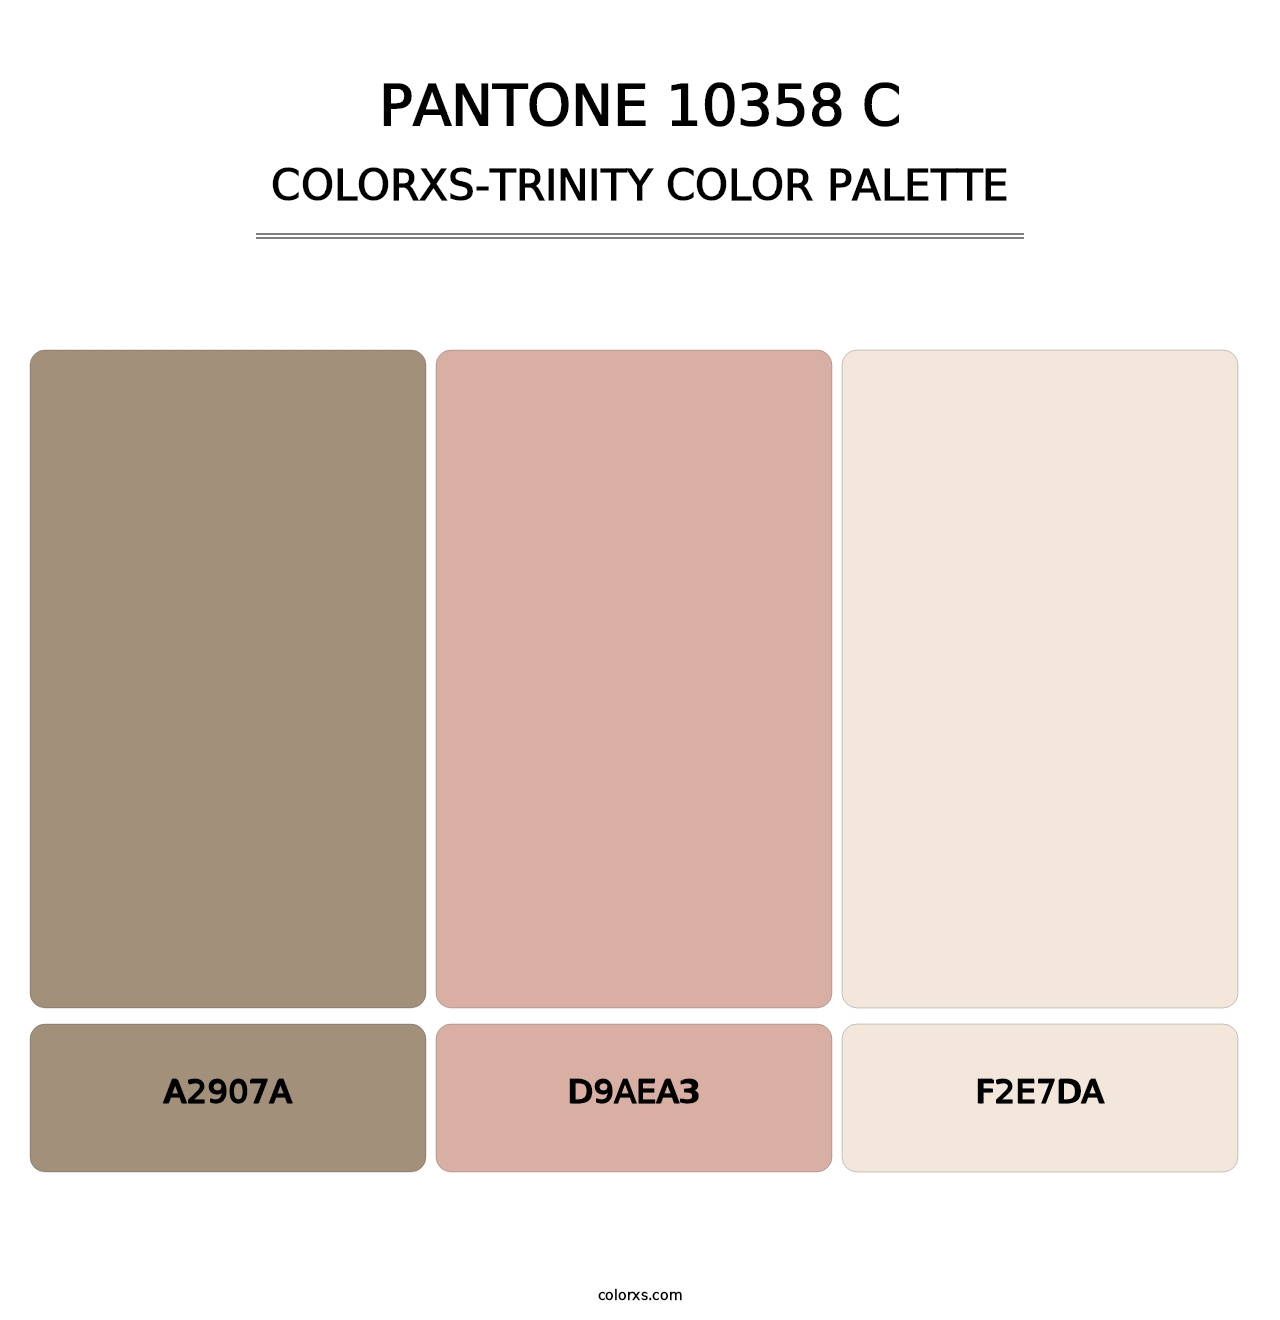 PANTONE 10358 C - Colorxs Trinity Palette